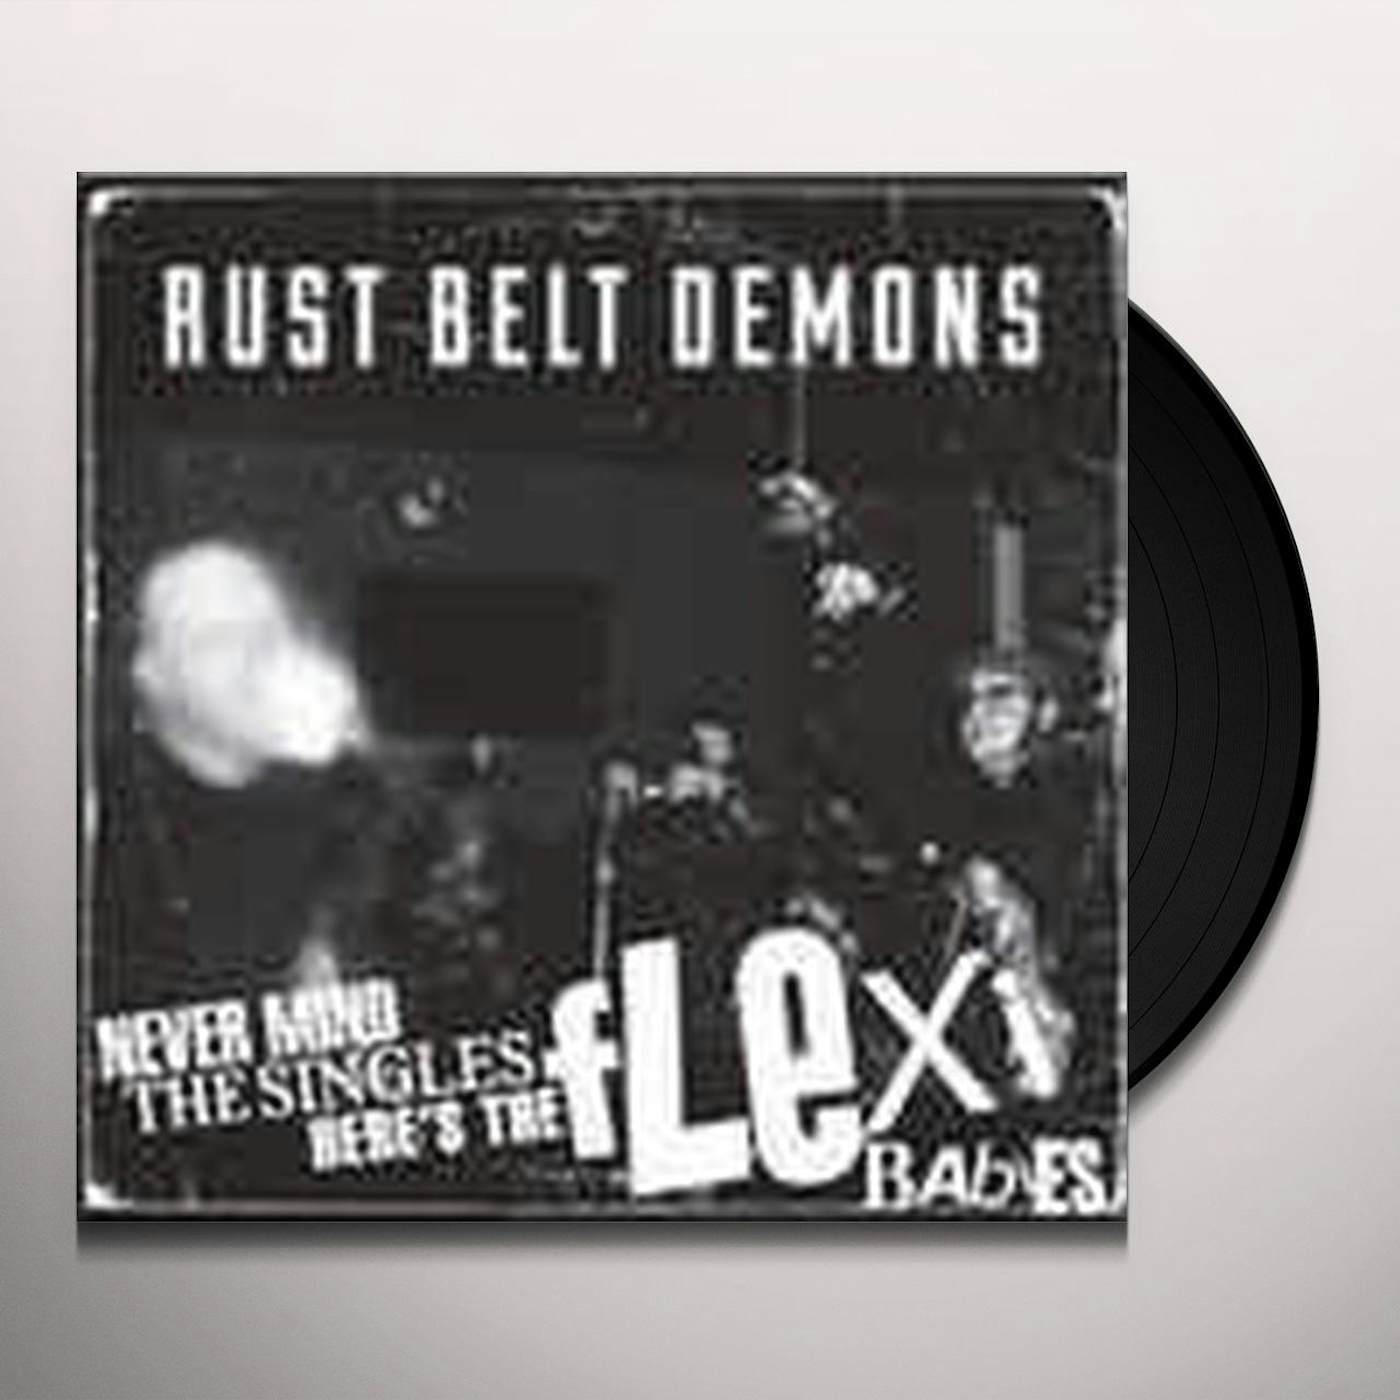 Rust Belt Demons NEVER MIND THE SINGLES HERE'S Vinyl Record